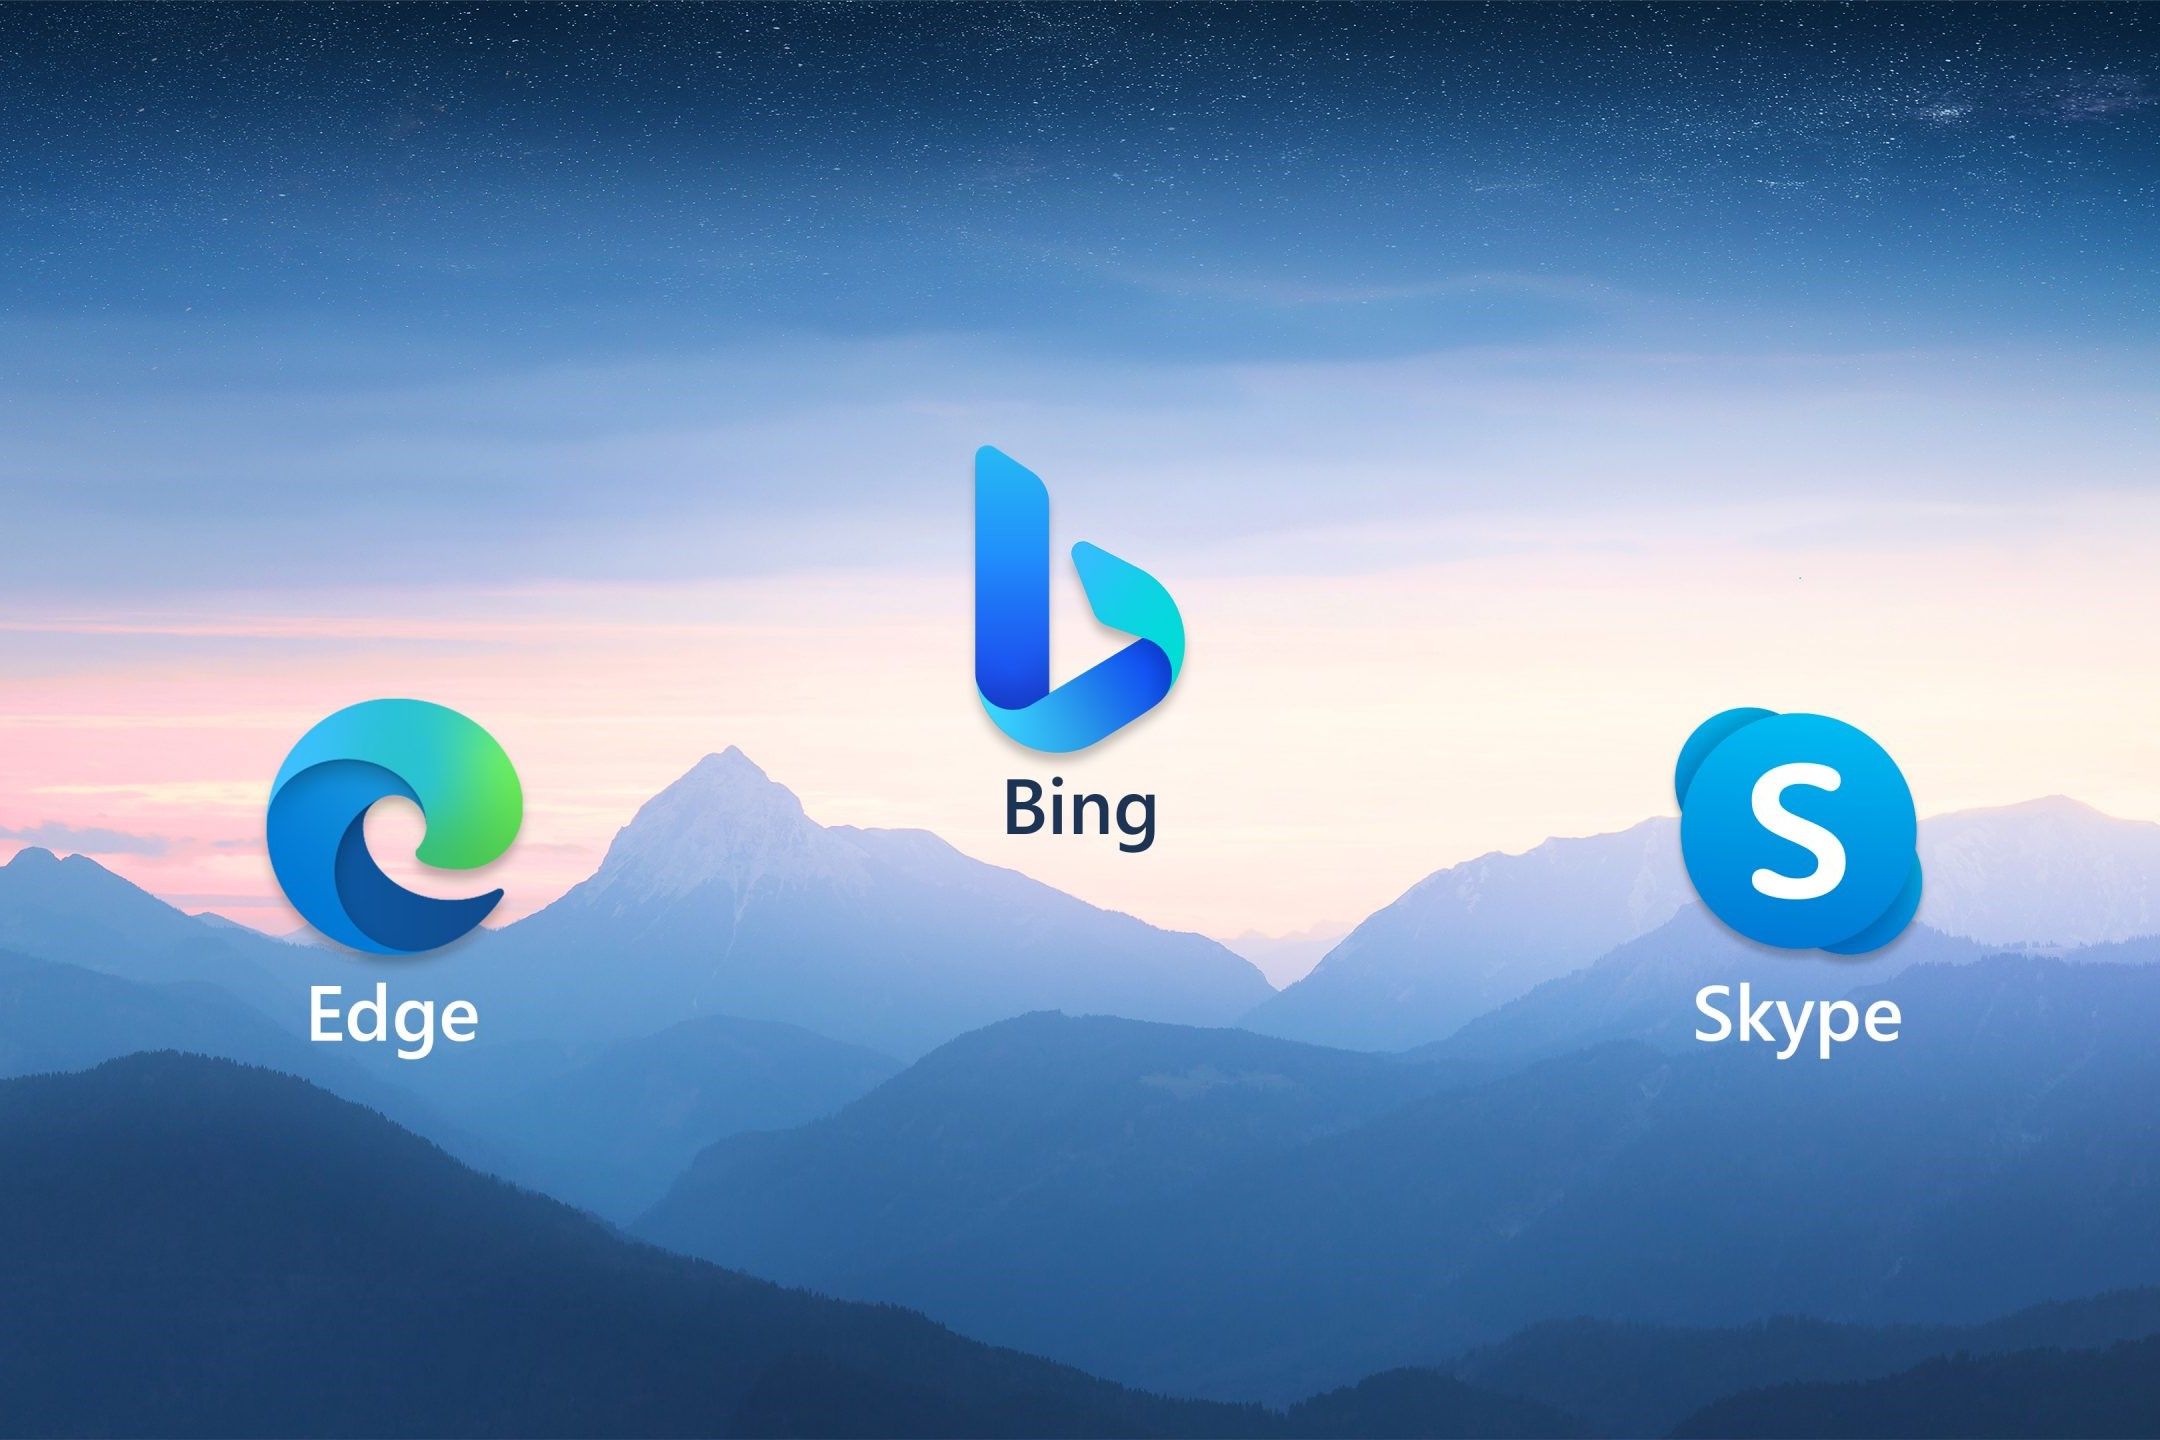 Microsoft Bing, Edge, and Skype logos